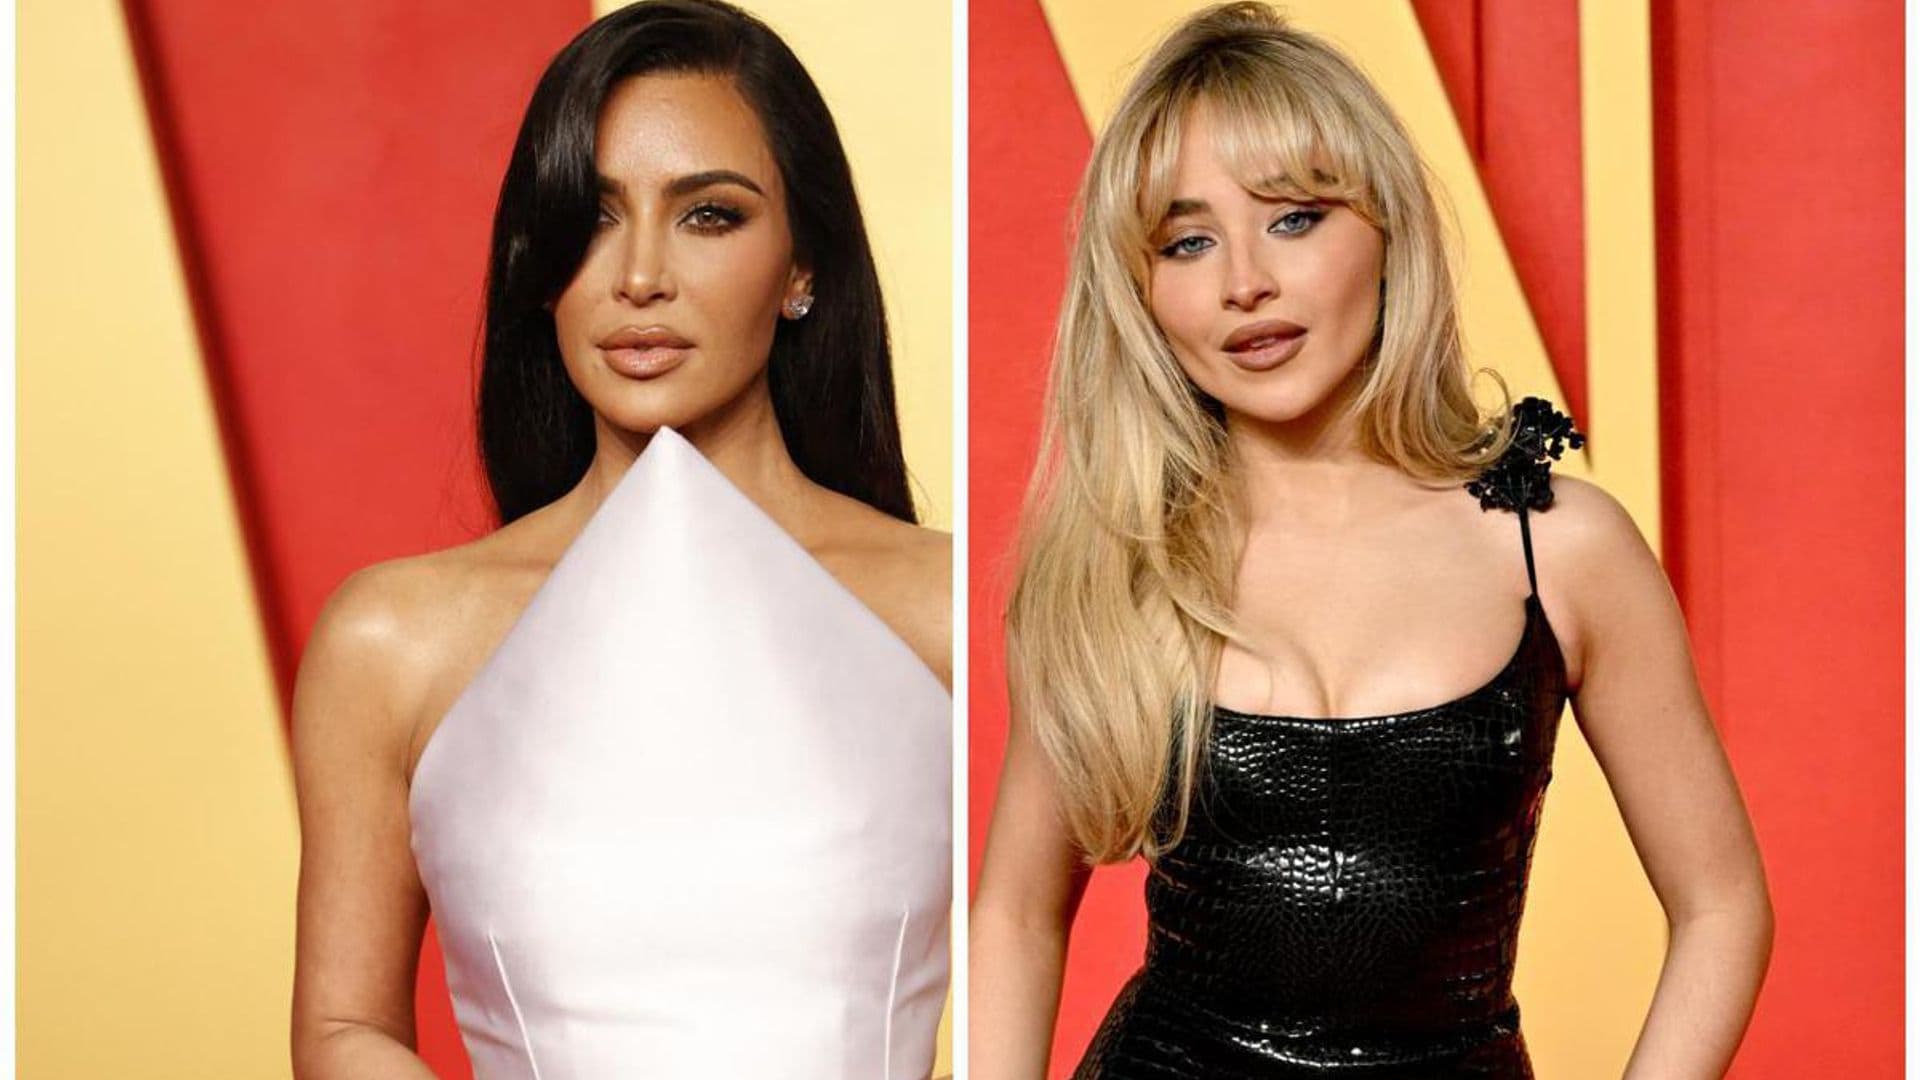 Kim Kardashian shares Sabrina Carpenter’s lingerie photoshoot, calls her ‘the next-gen pop star’